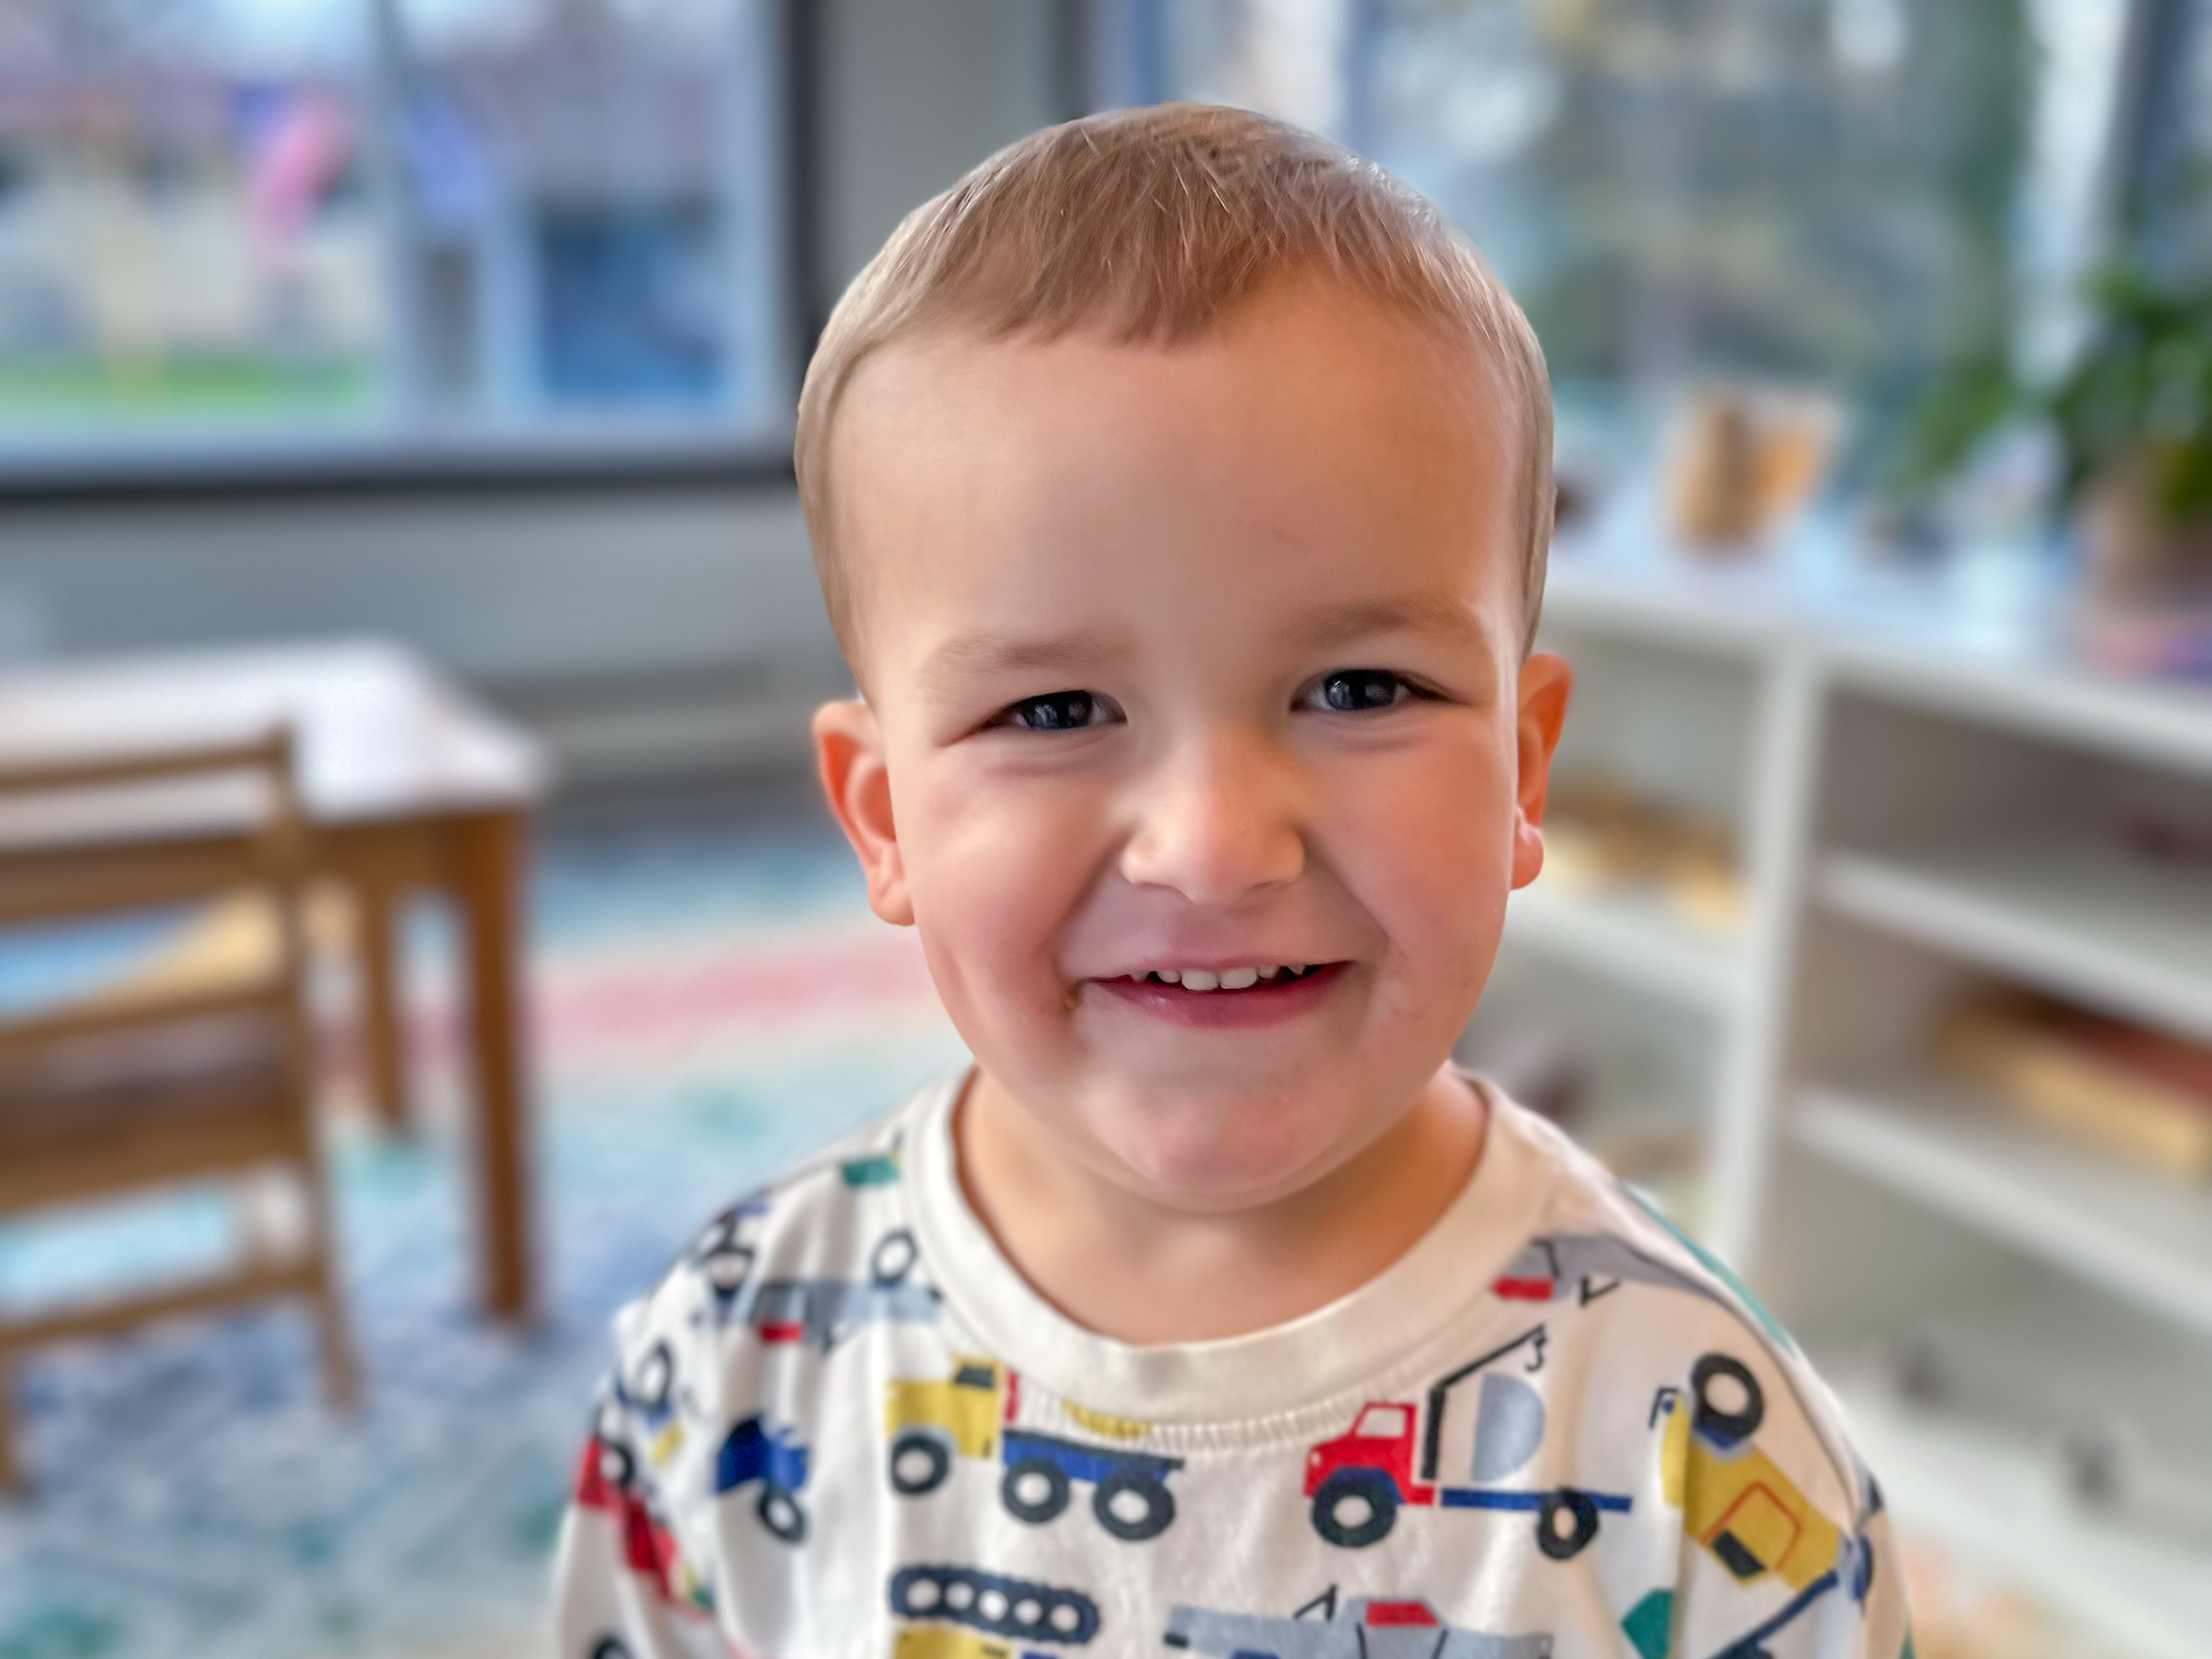 Montessori Toddler - Preparing for a Haircut